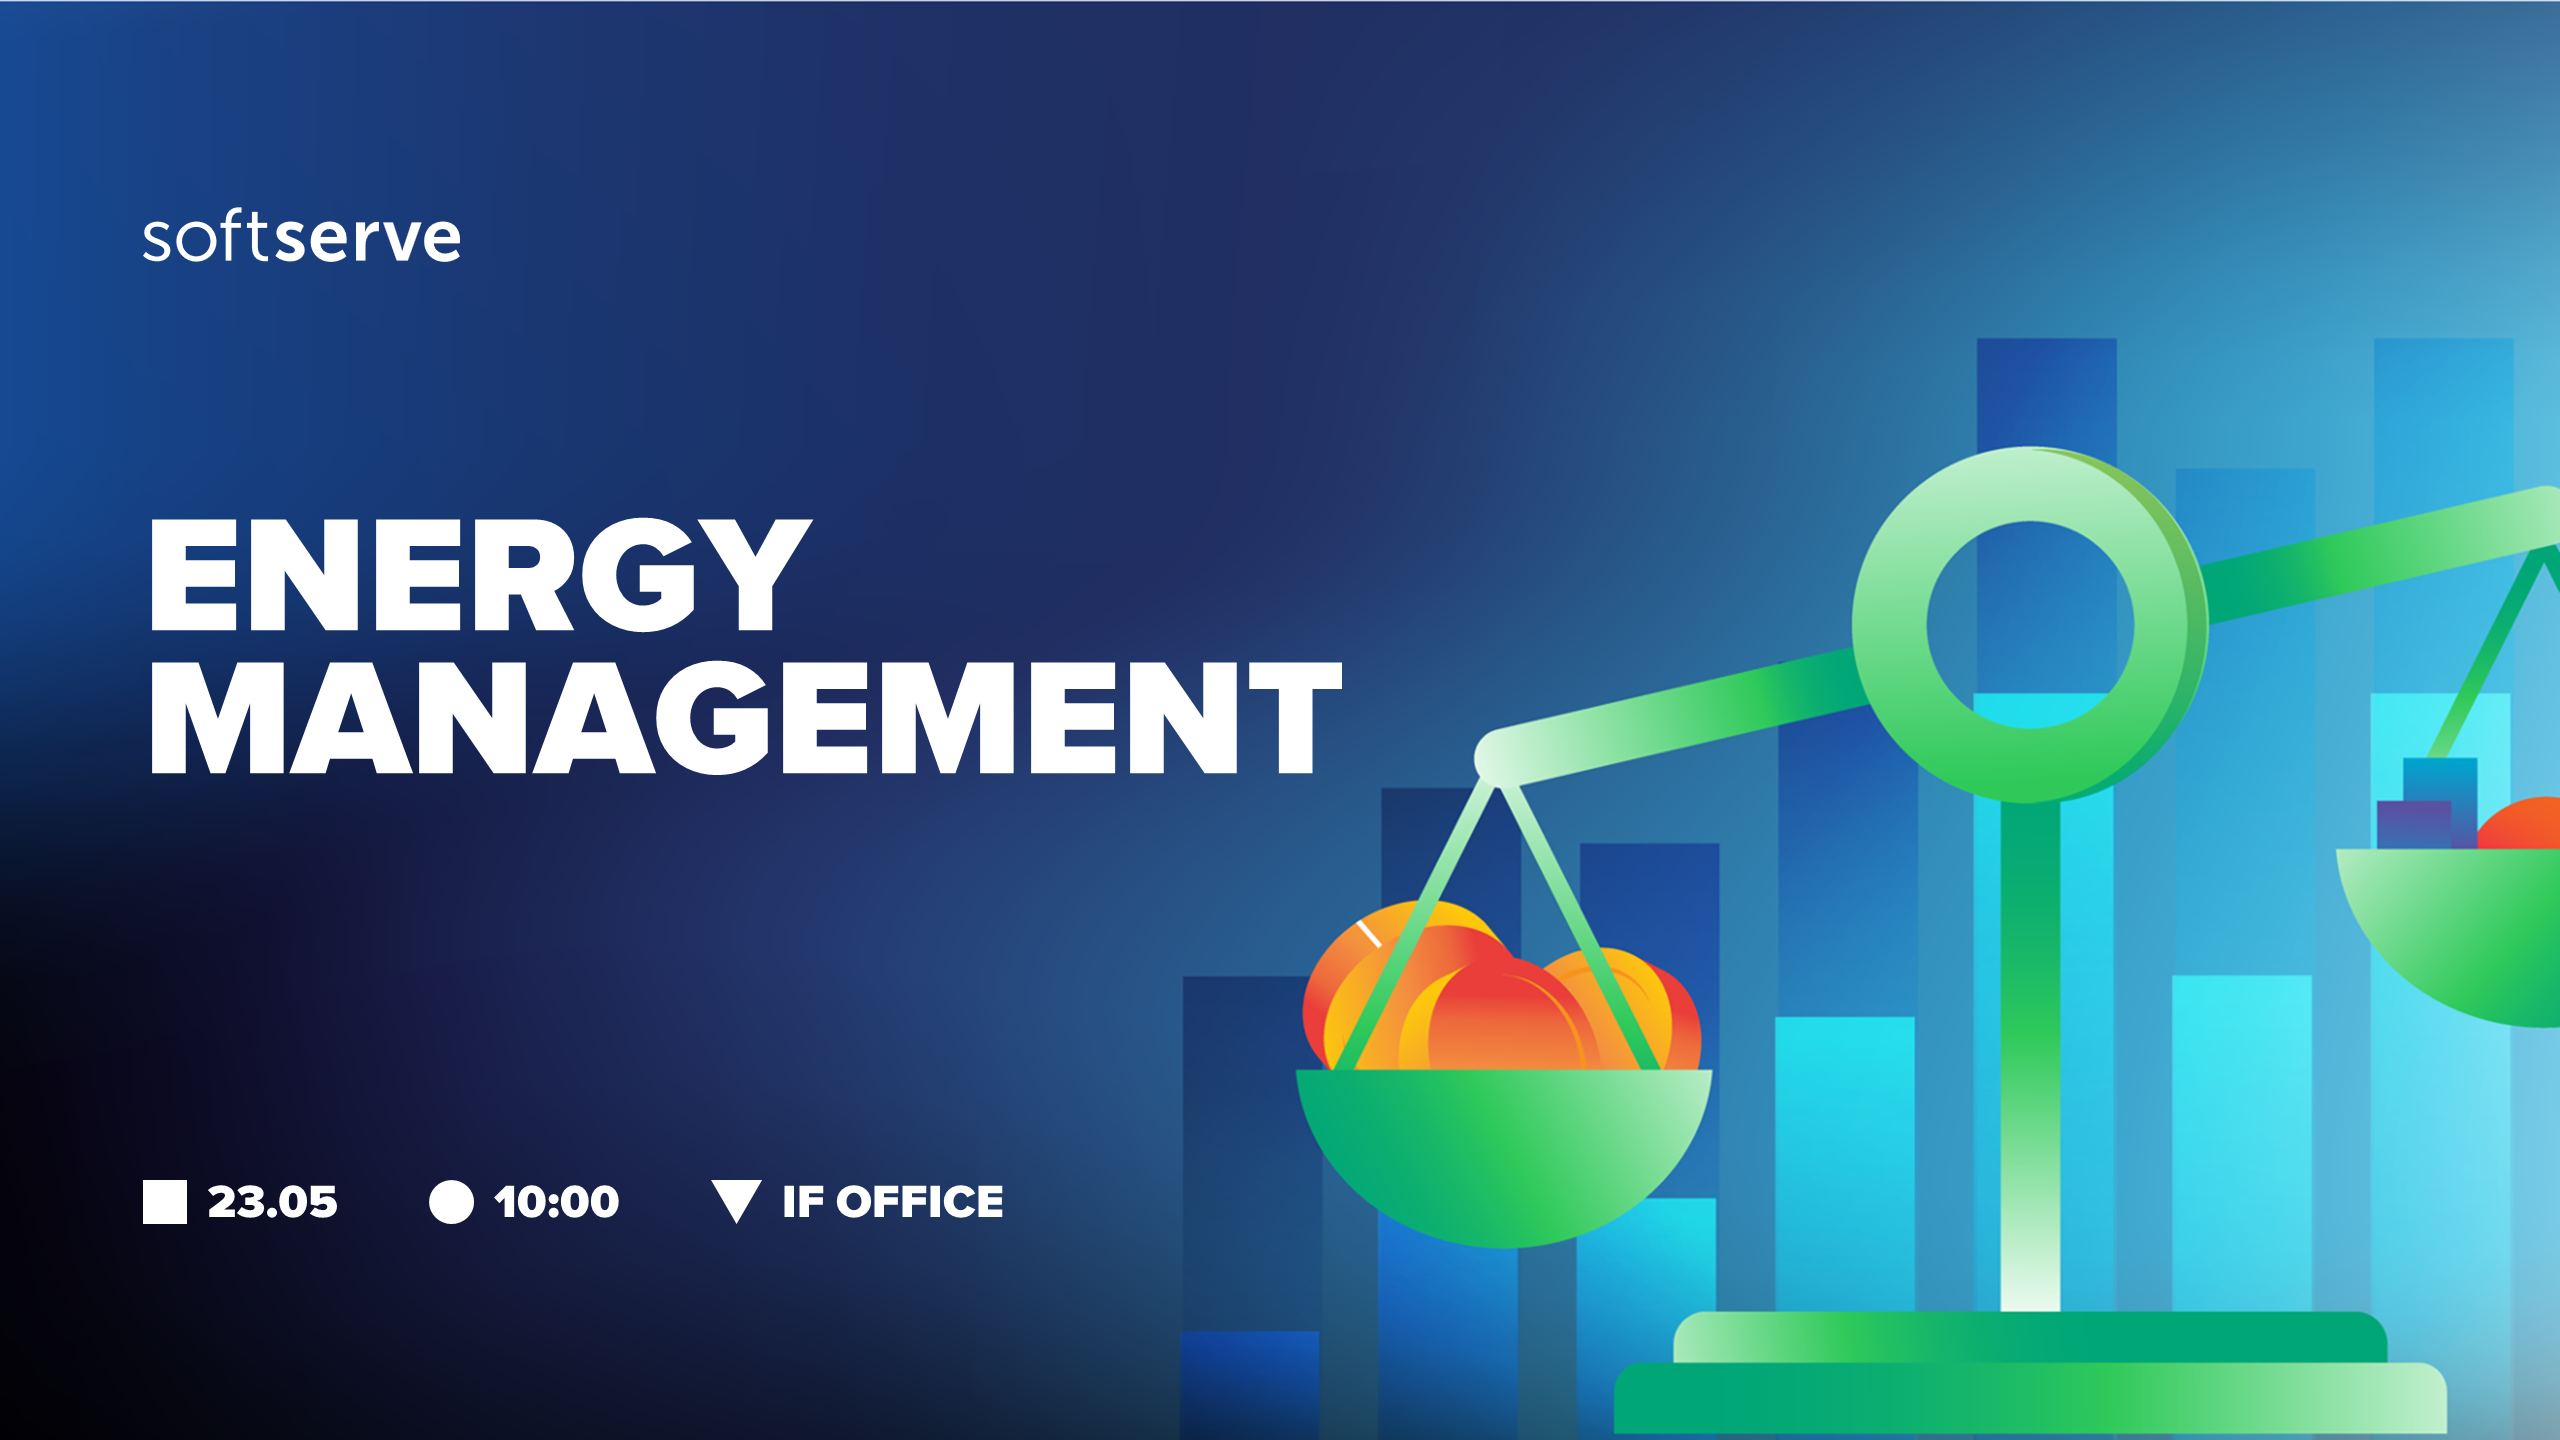 Energy management